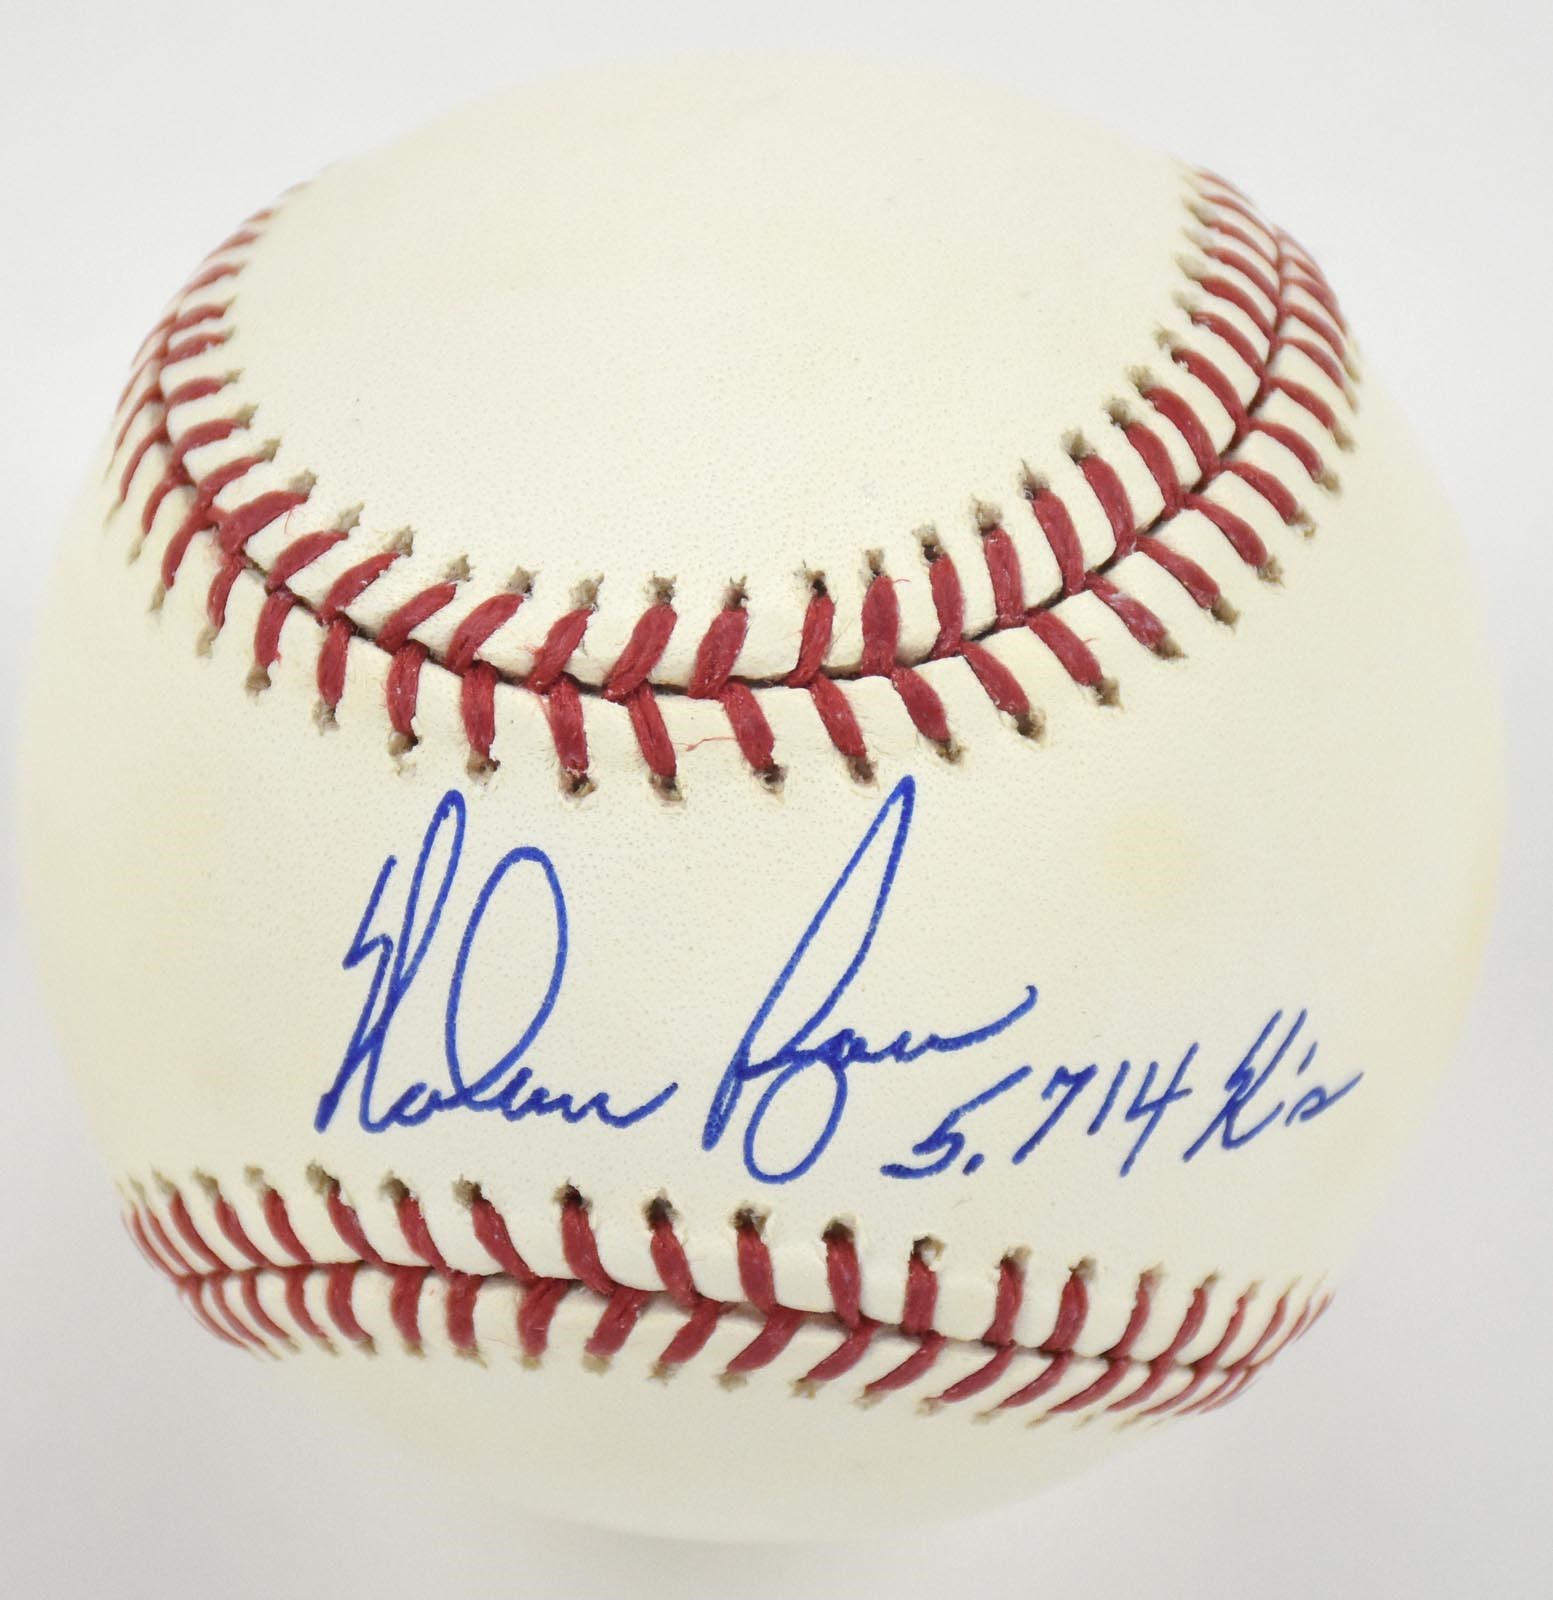 - Nolan Ryan "5714 K's" Single Signed Baseball (Steiner)